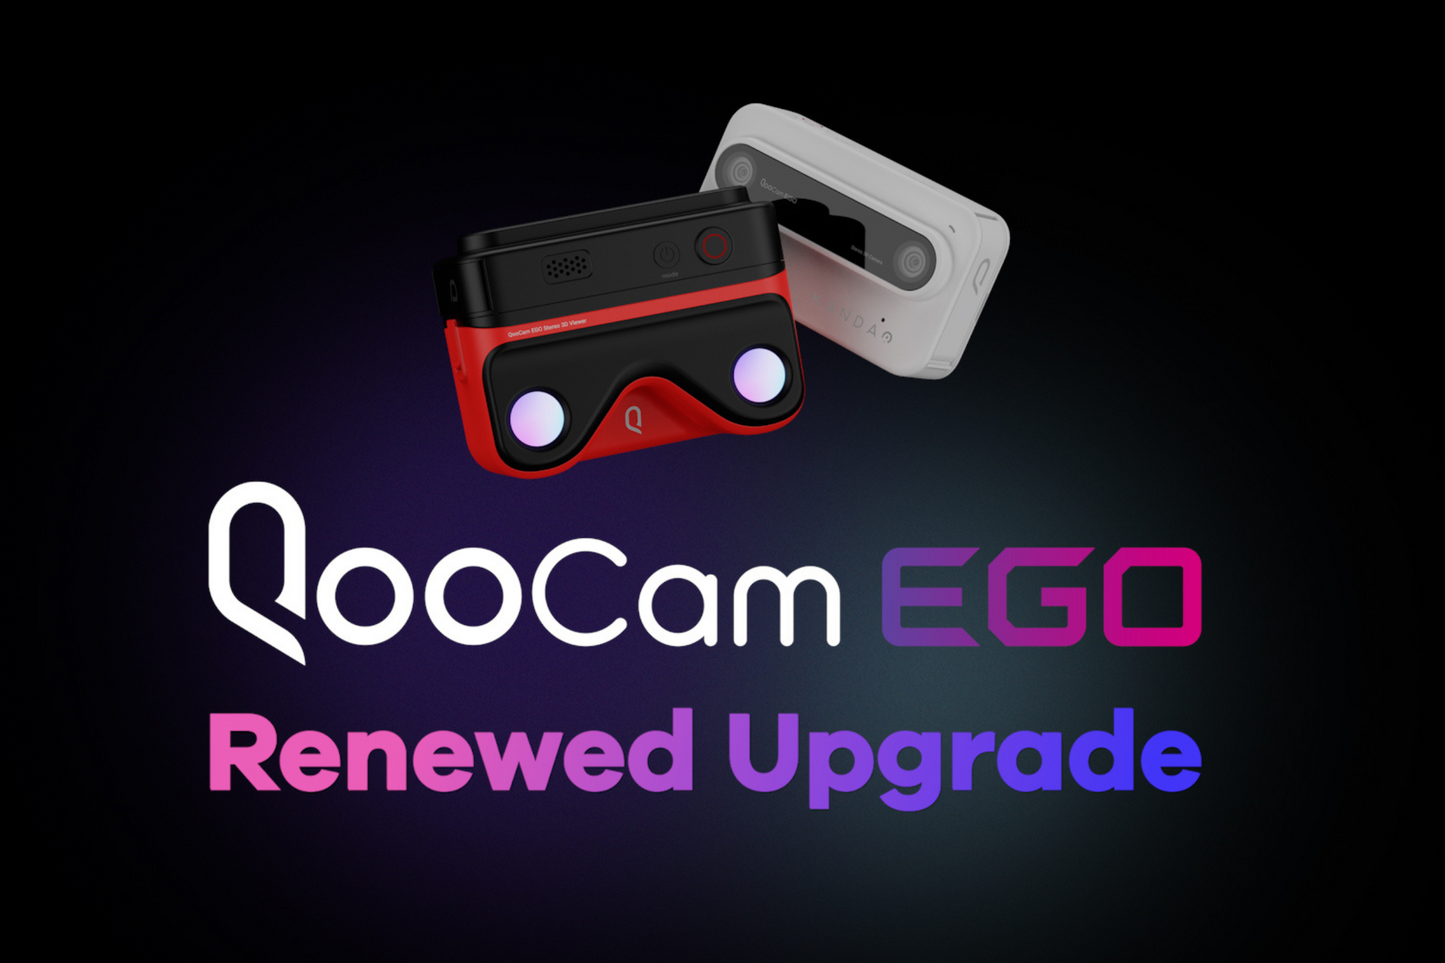 QooCam EGO Renewed Upgrade, Capturing Infinite Spring Moments